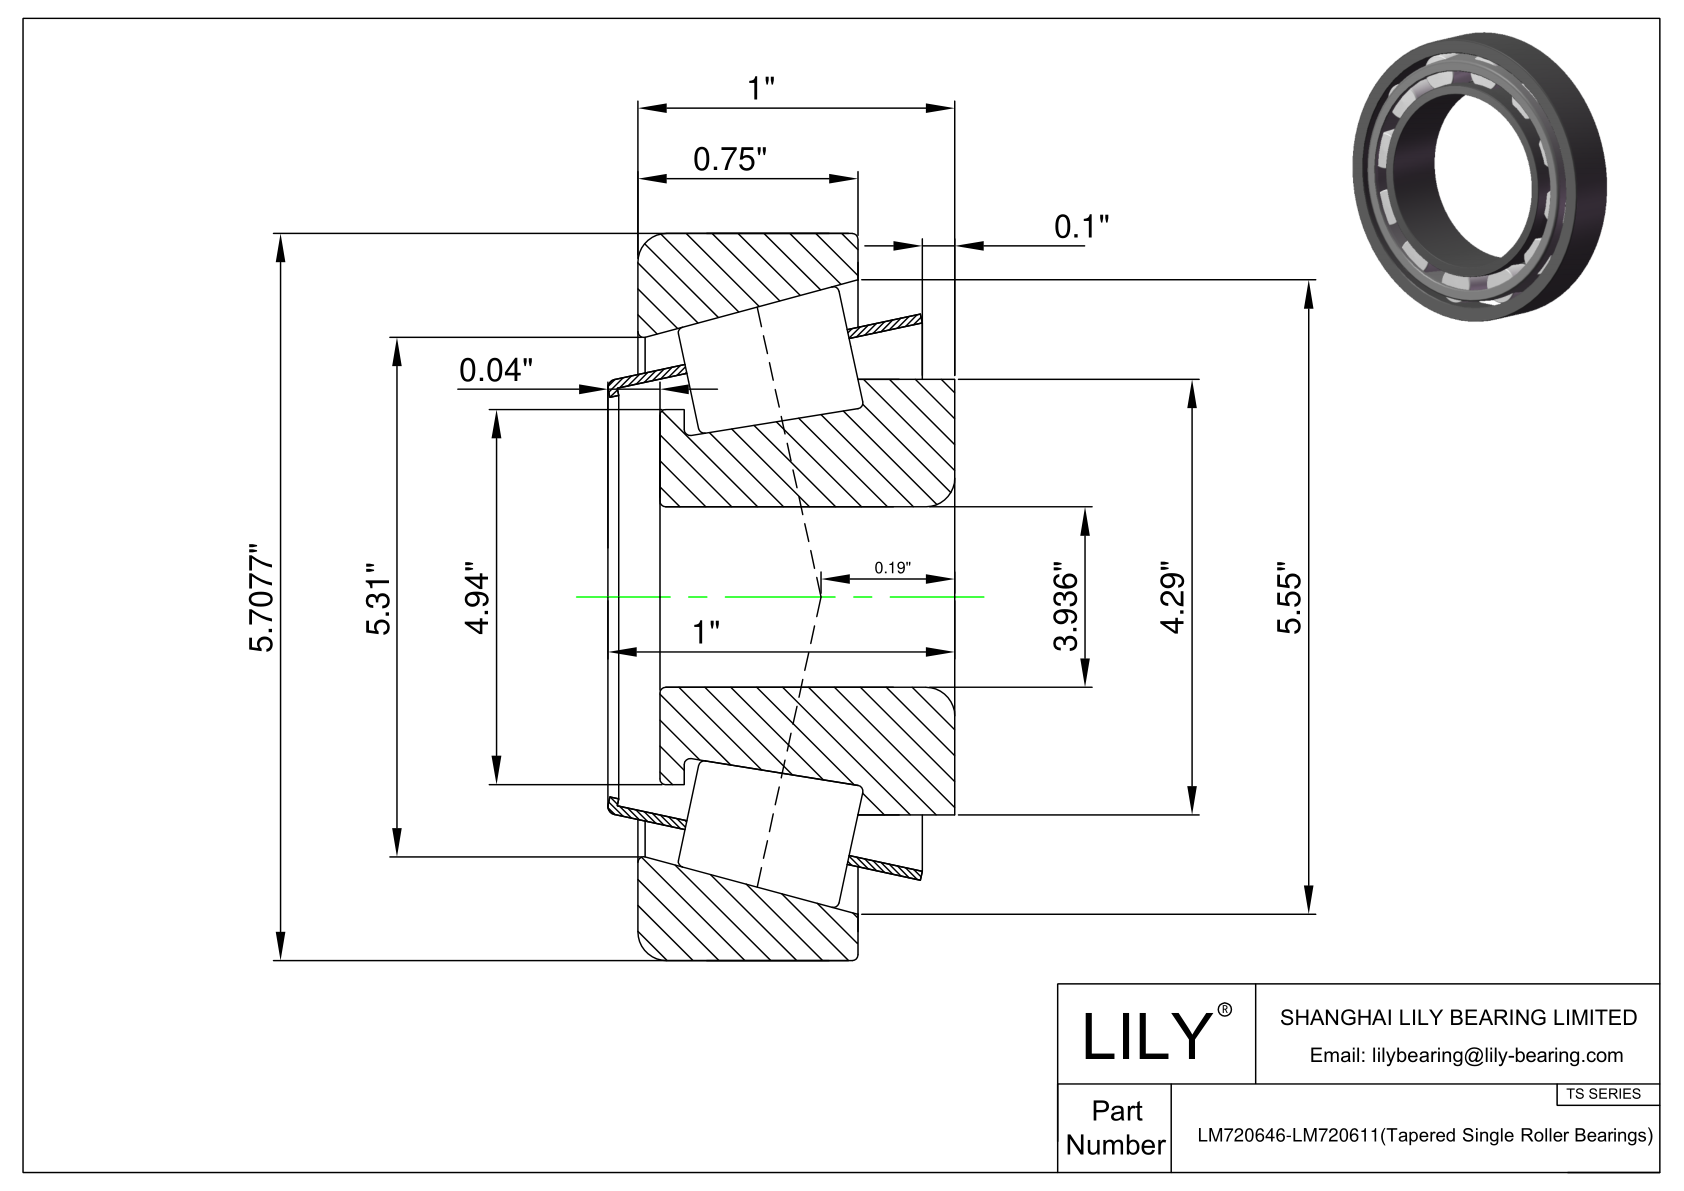 LM720646-LM720611 TS系列(圆锥单滚子轴承)(英制) CAD图形